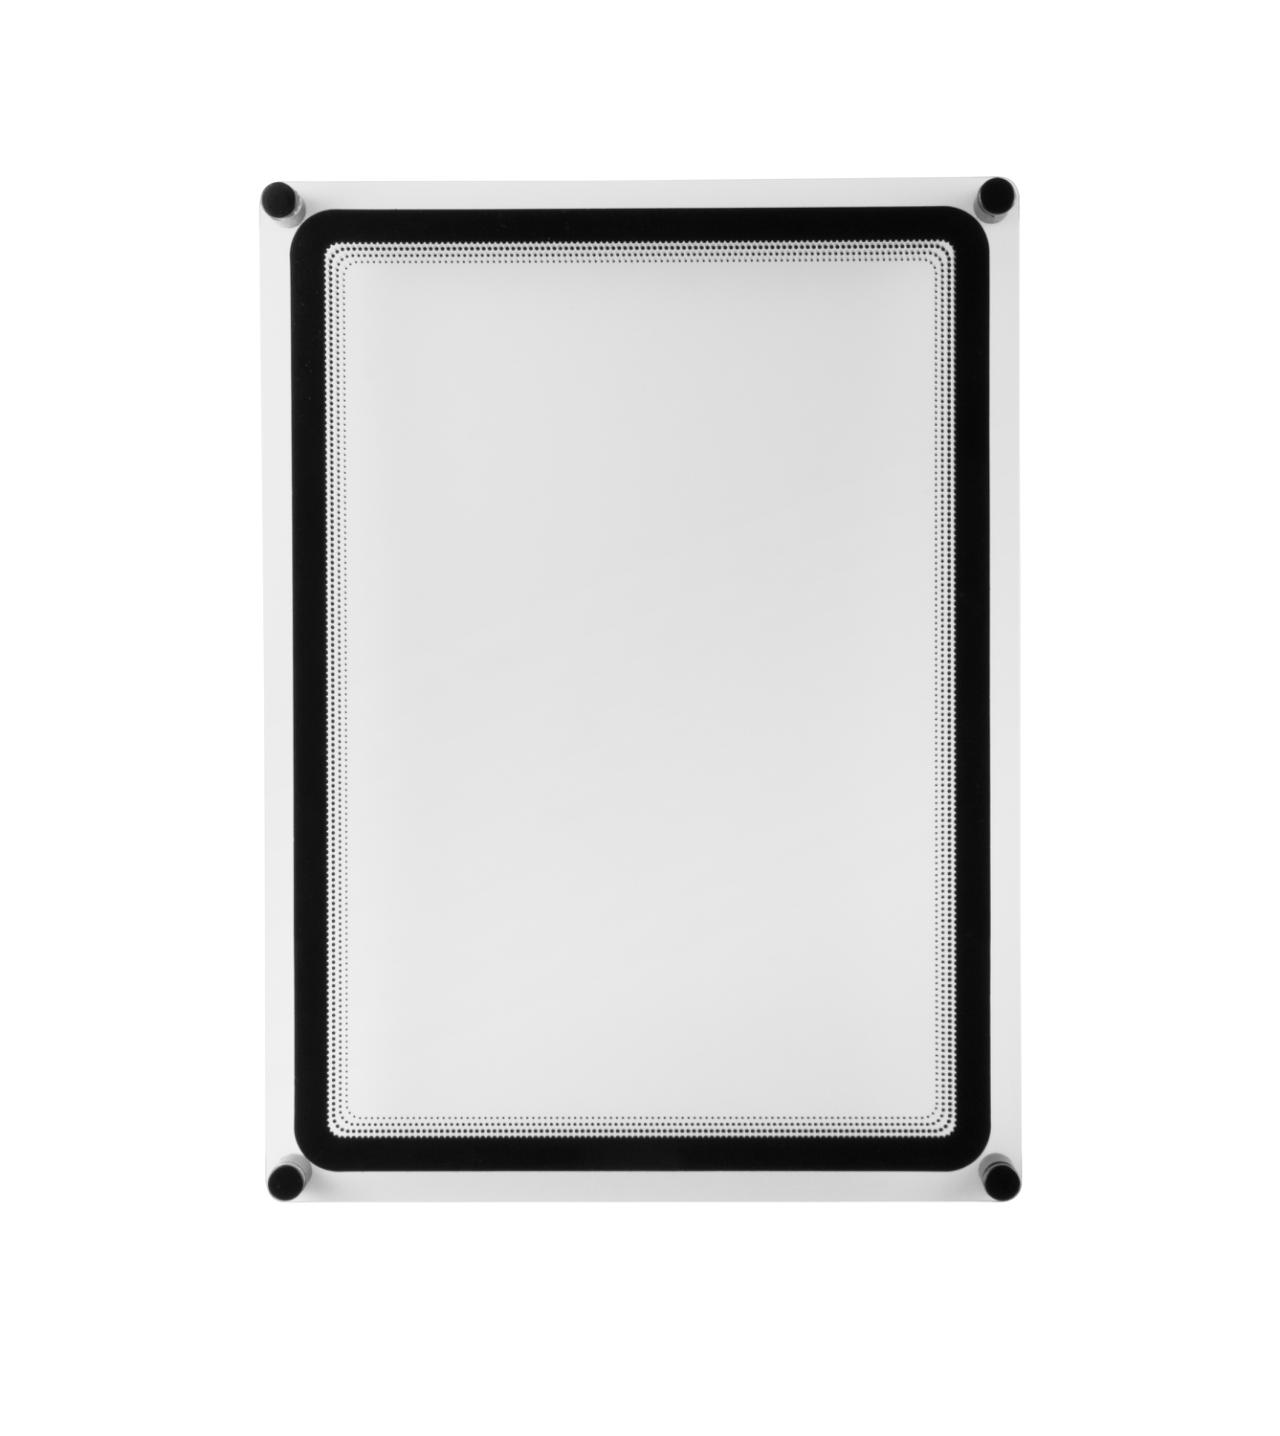 Acrylic Wall Sign Holder with A4 Magneto Frame Display Pocket, Portrait/Landscape